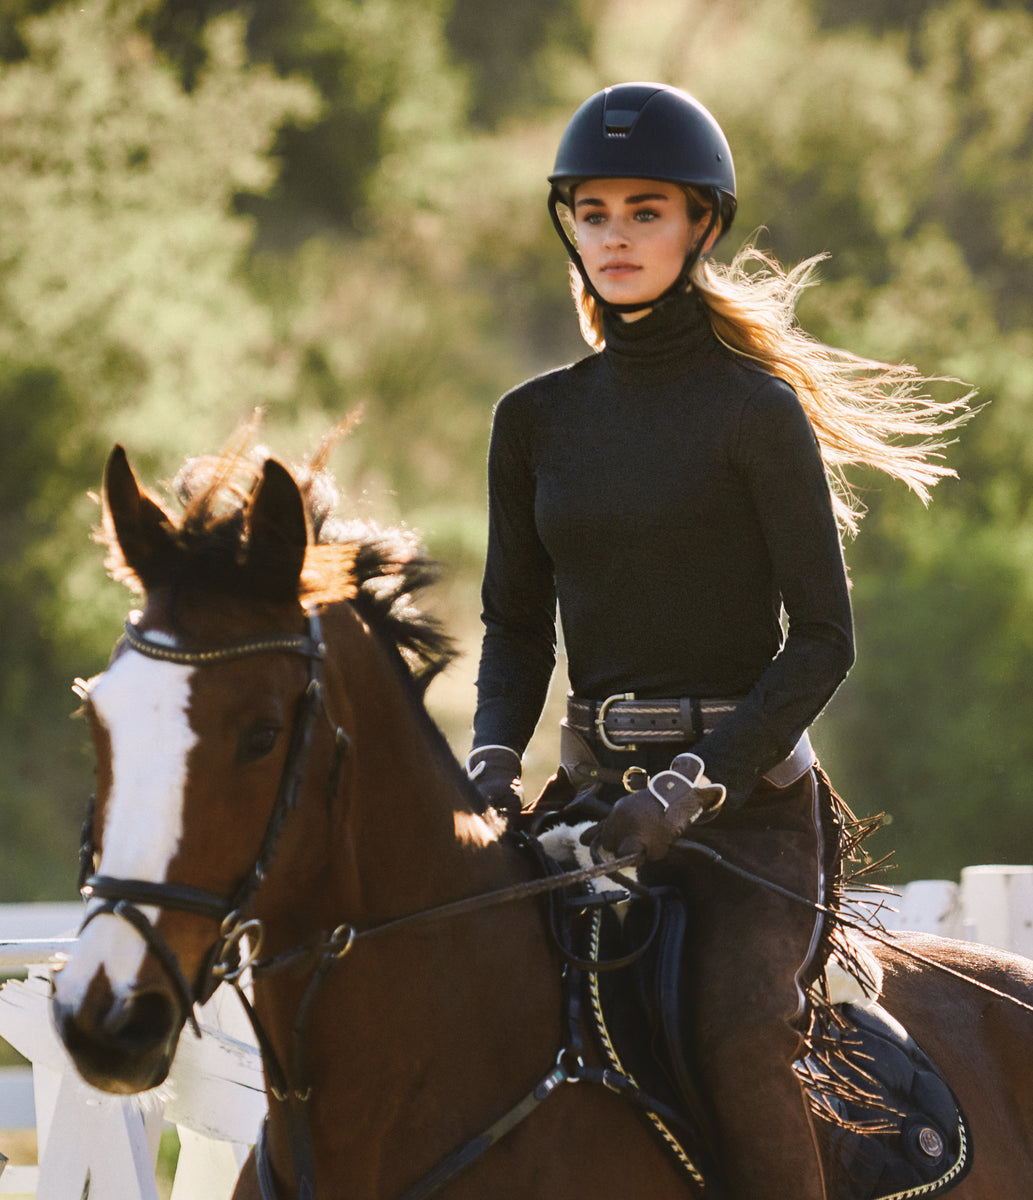  Woman Equestrian Rider wear The Surrey Merino Wool Black Turtleneck